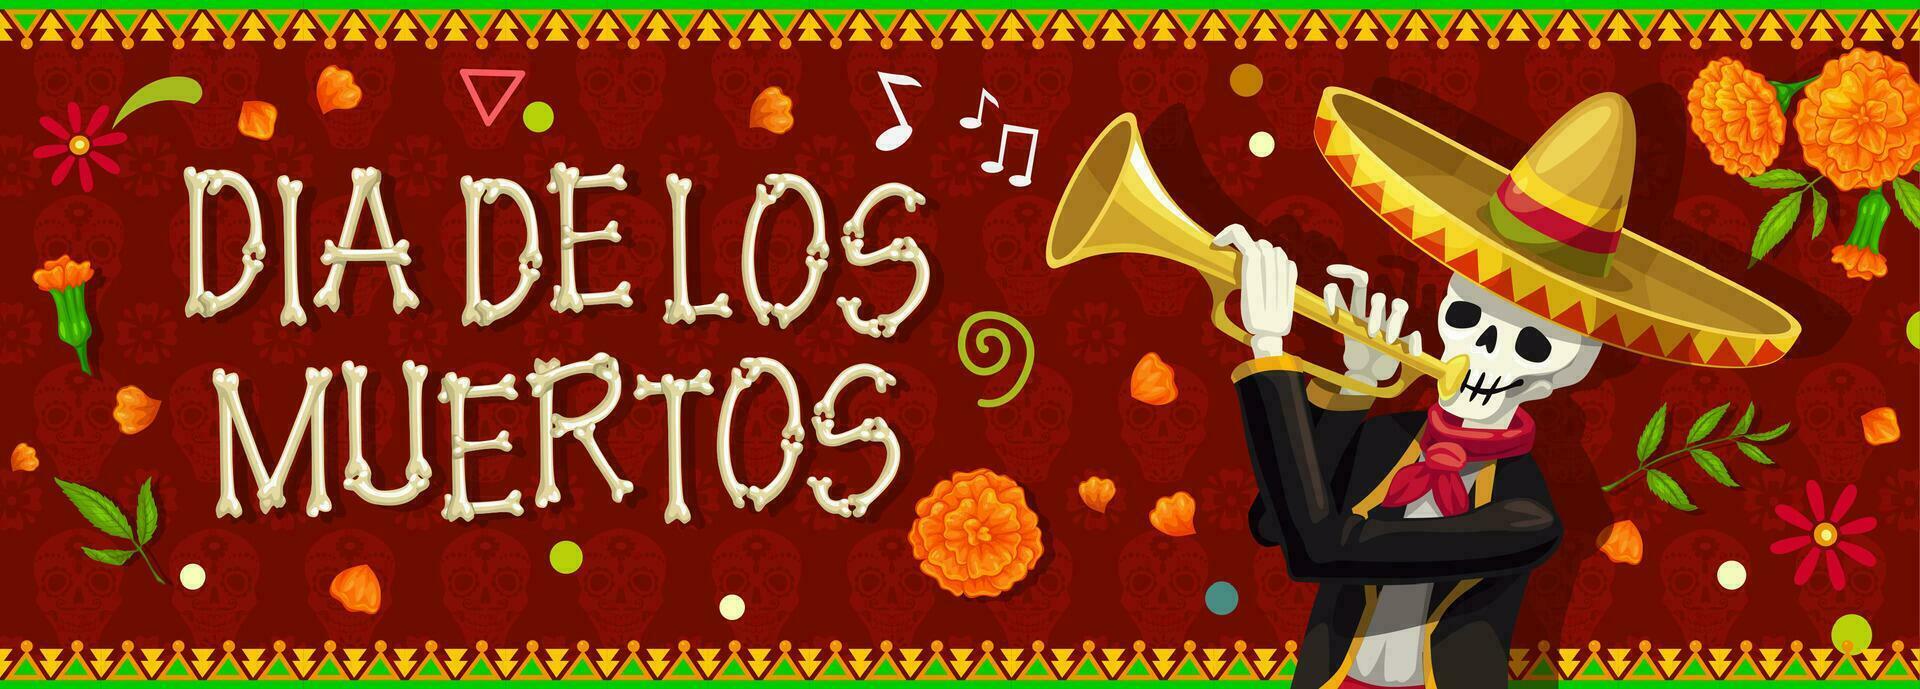 mexicano morto dia bandeira desenho animado mariachi músicos vetor